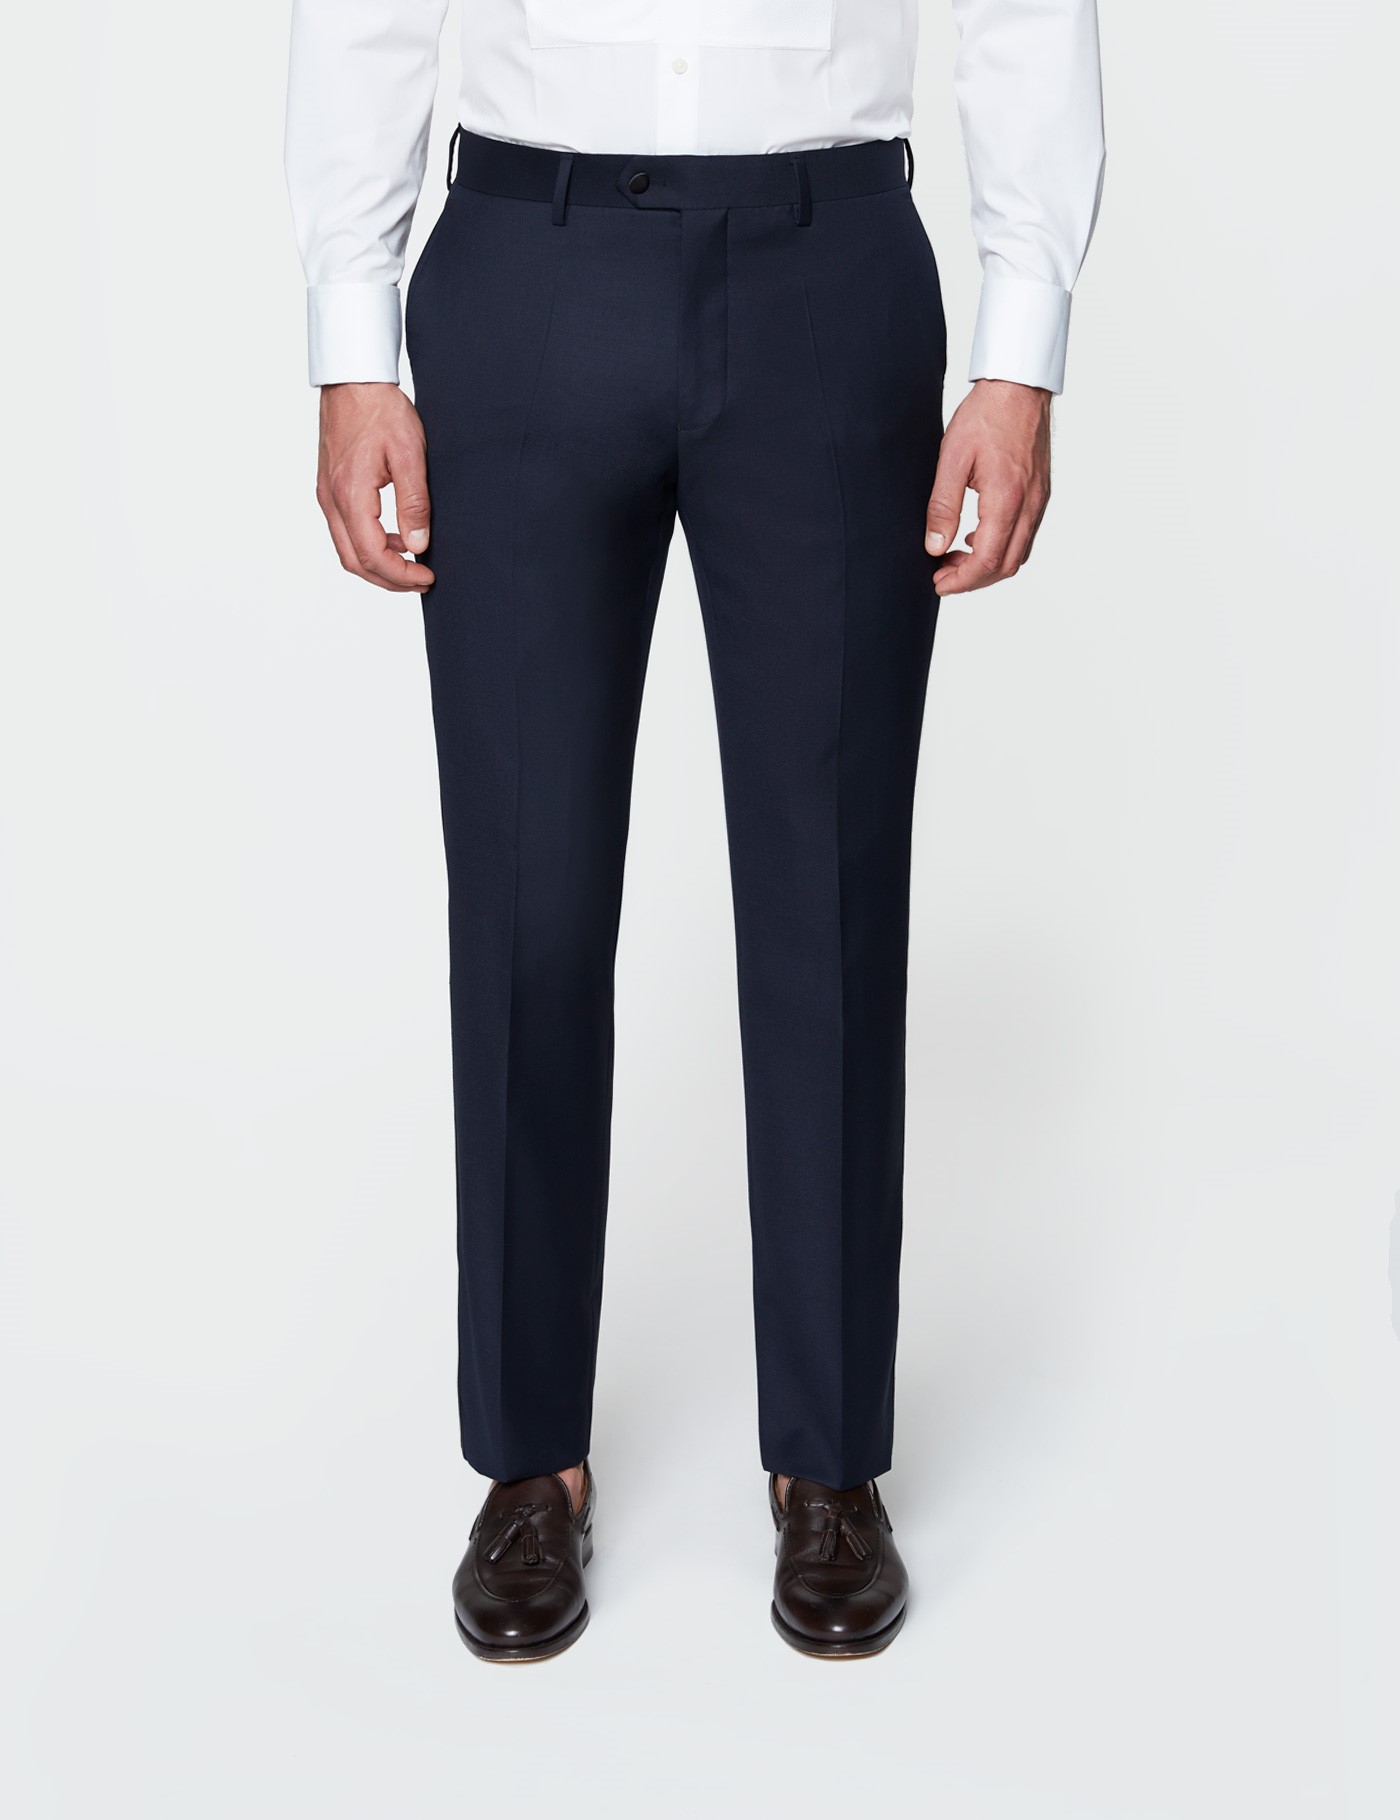 Buy Beige Trousers  Pants for Men by Canary London Online  Ajiocom